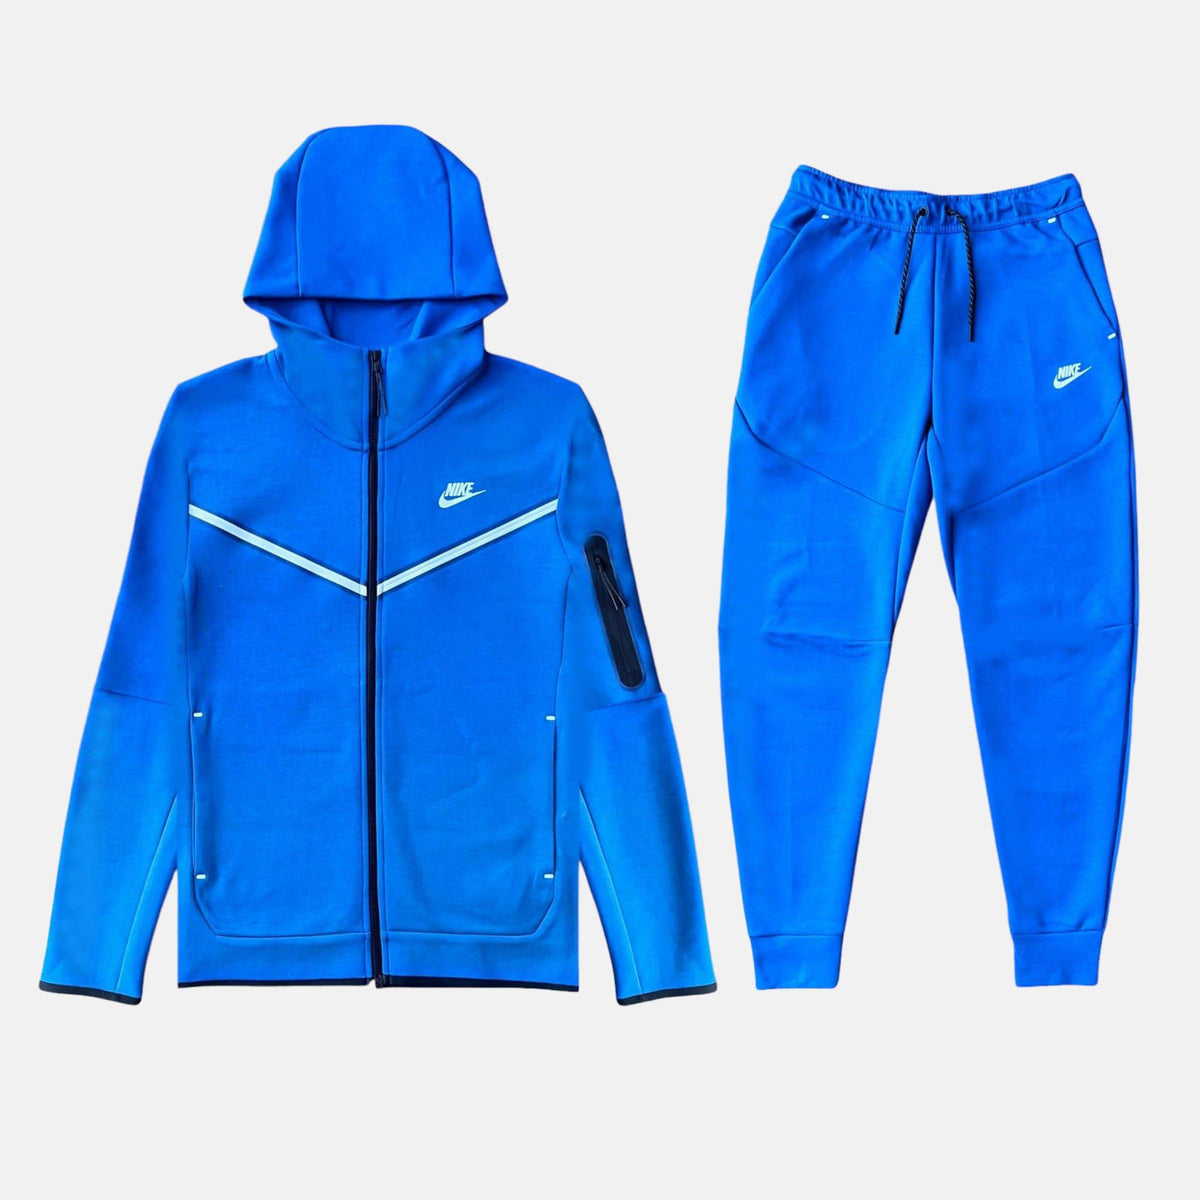 Nike Tech Fleece Set - Marina Blue (3rd Gen) - No Sauce The Plug